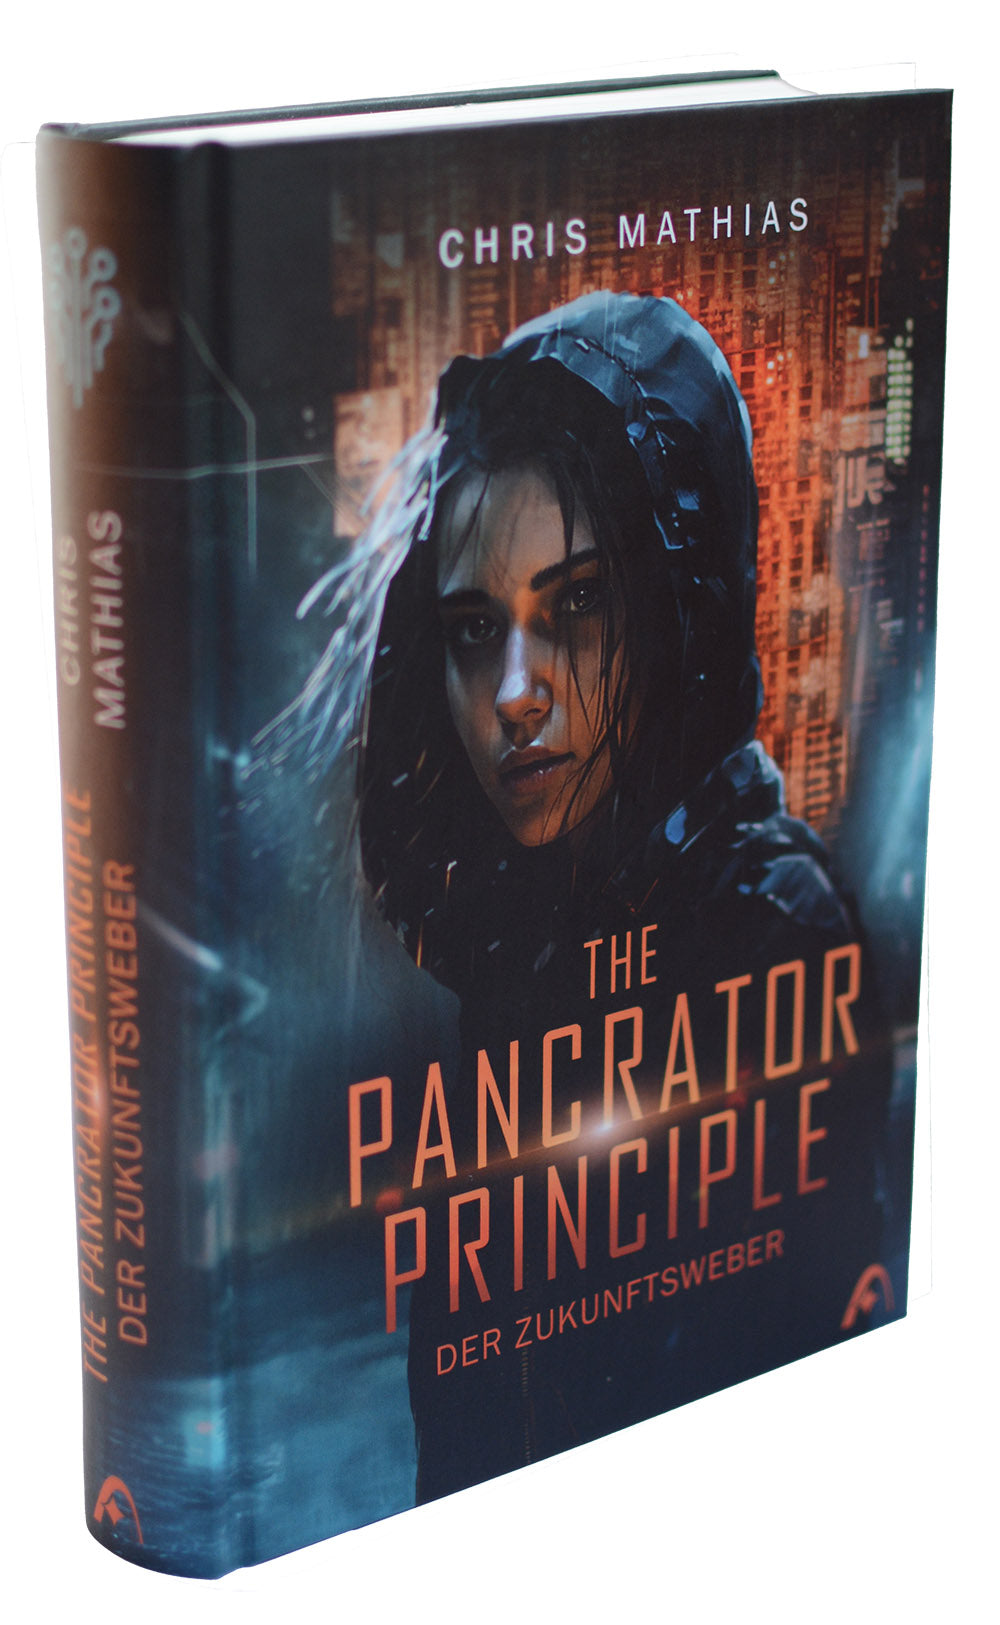 The Pancrator Principle - Der Zukunftsweber (Hardcover)